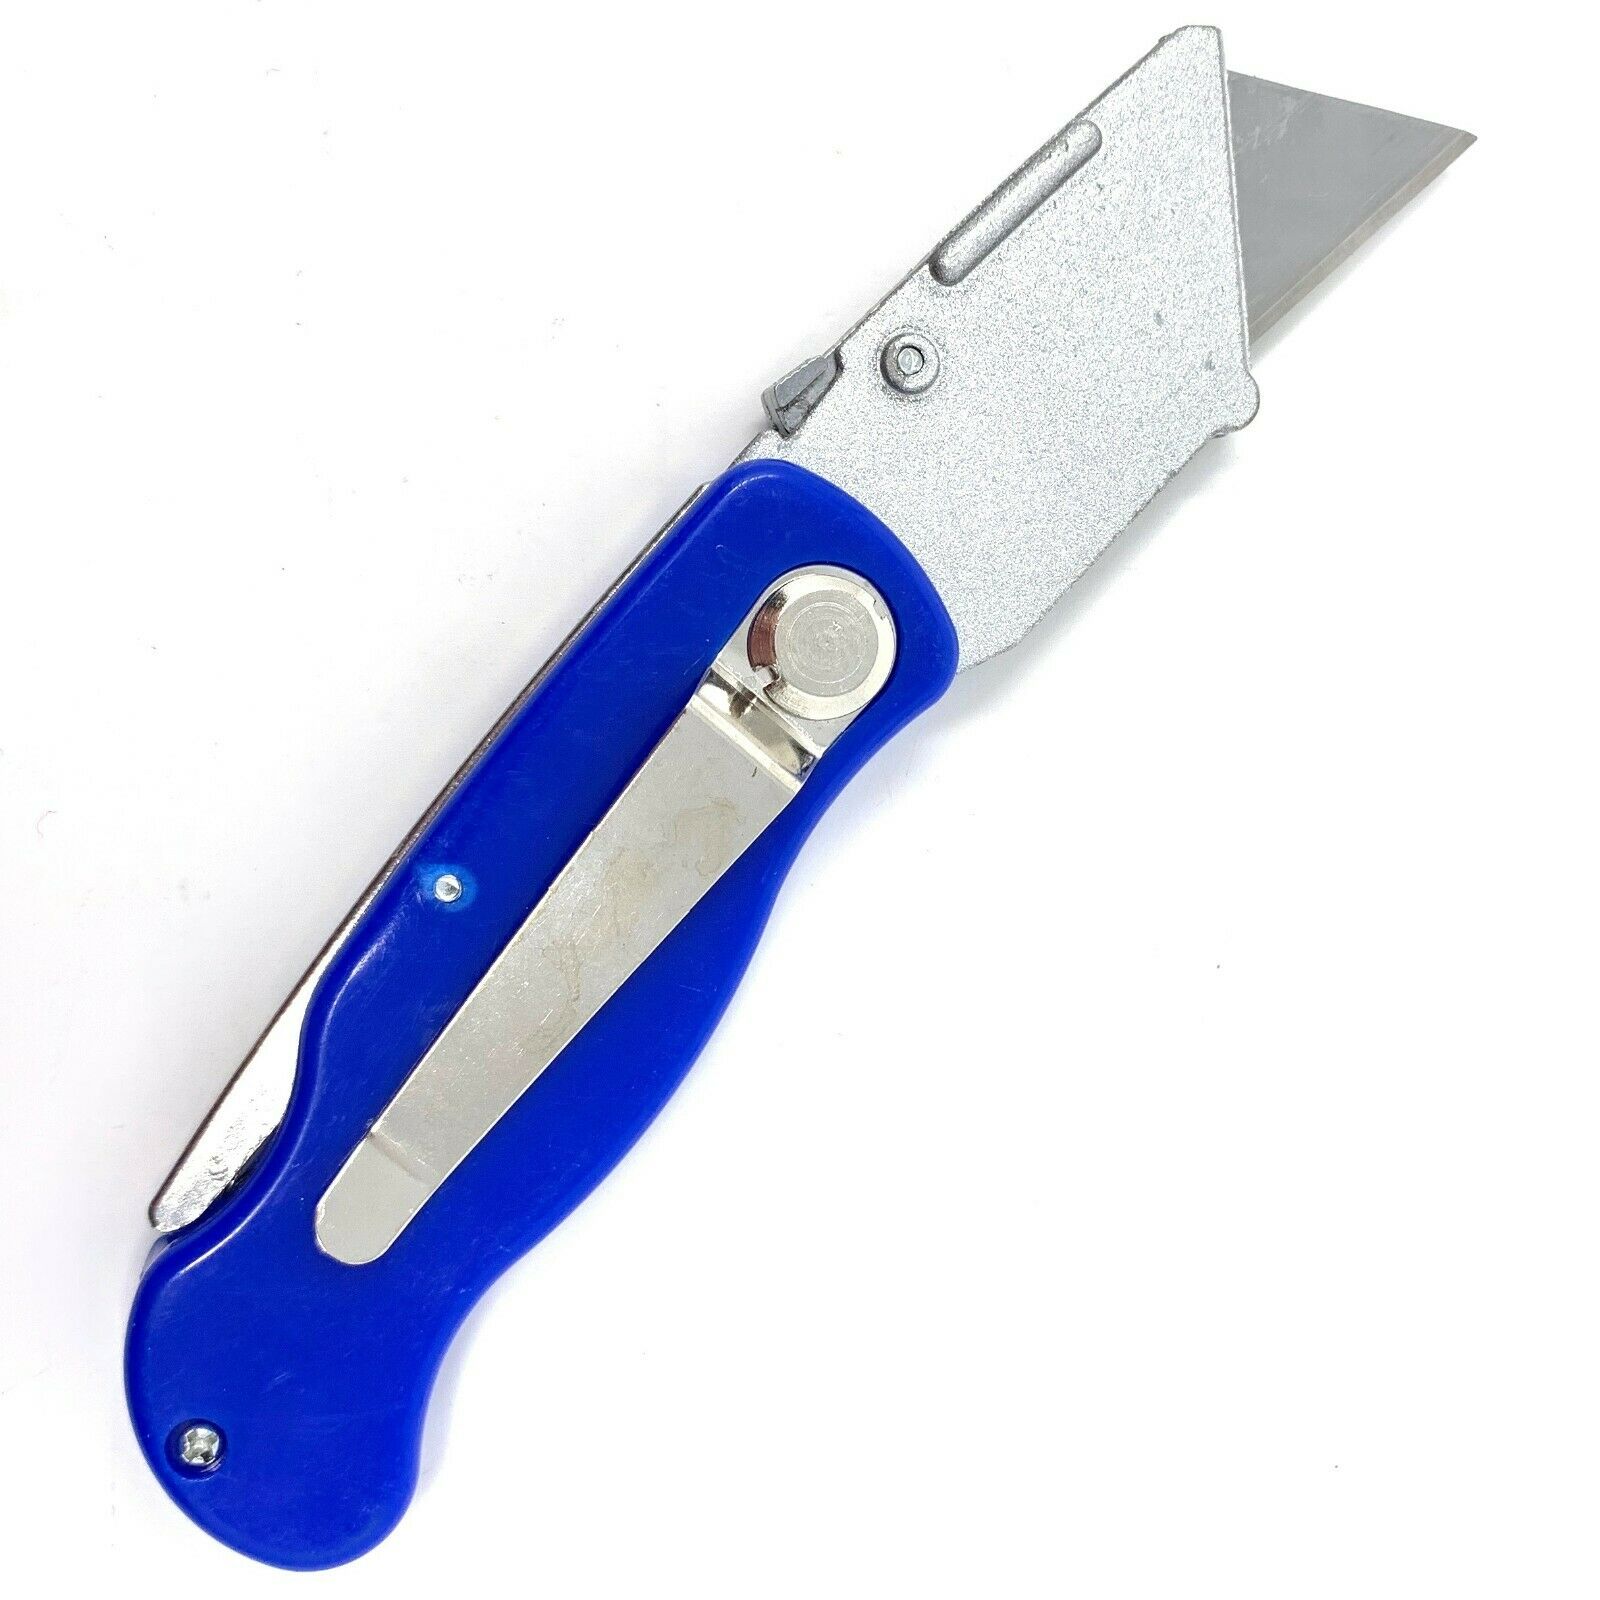 Folding Utility Pocket Knife Box Cutter With Lock Blade Blue 6 Blades